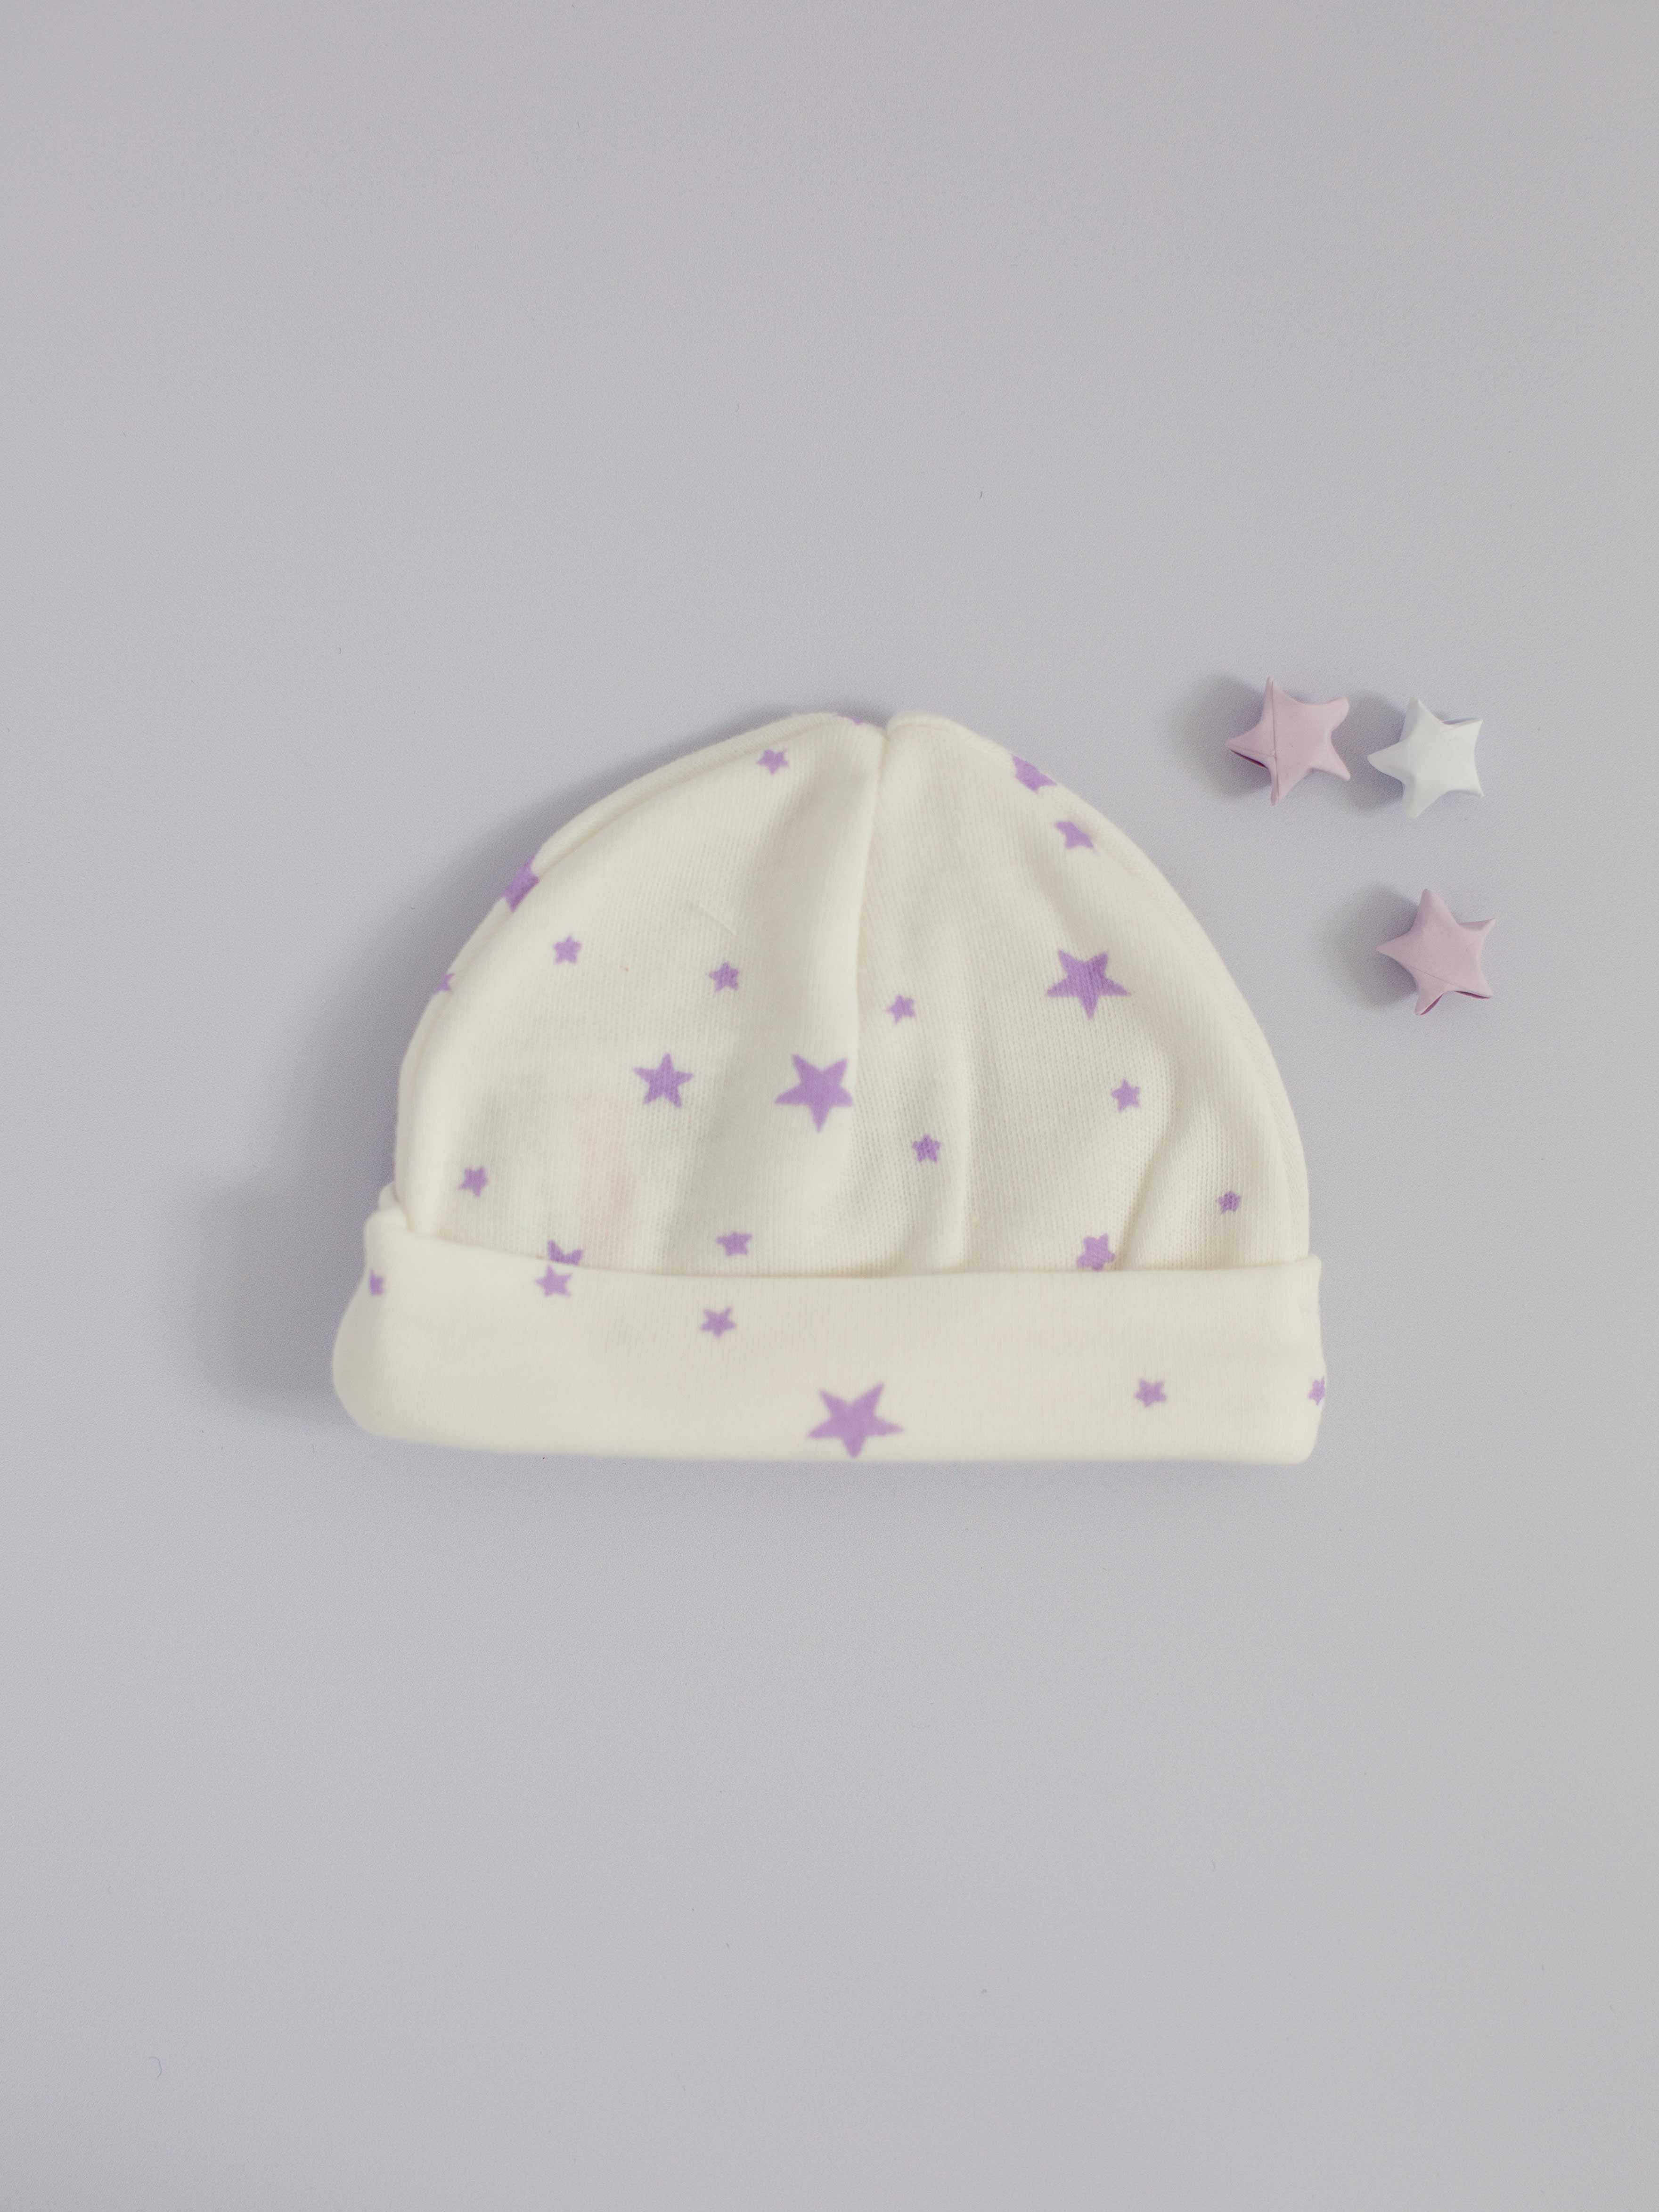 Round Premature Baby Hat, Purple Stars, Premium 100% Organic Cotton Hat Tiny & Small 